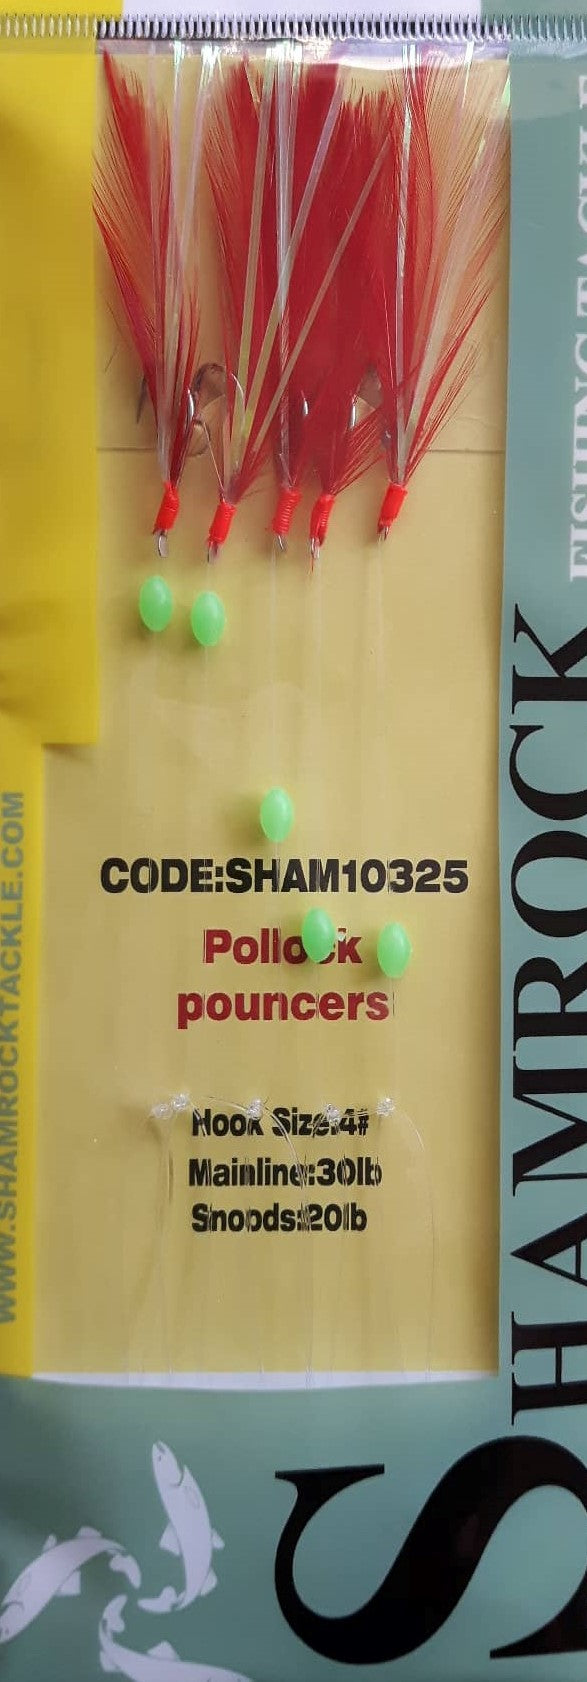 Shamrock rig pollock pouncers - VIVADO